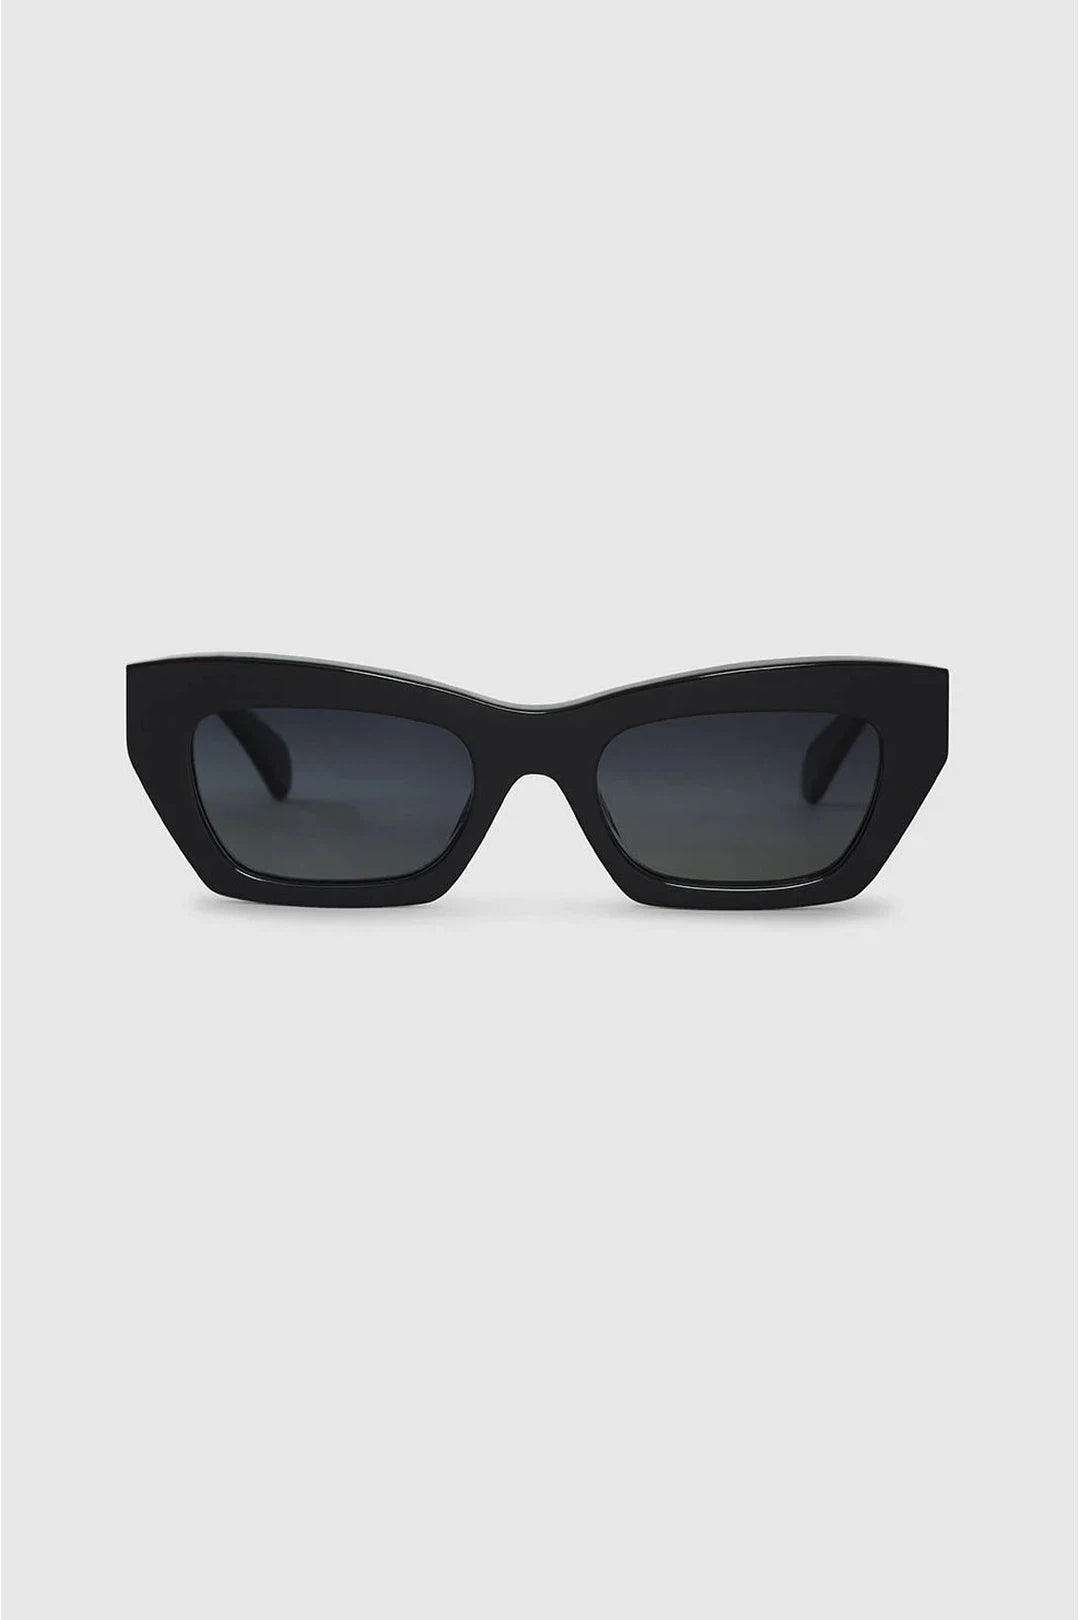 Sonoma sunglasses, black